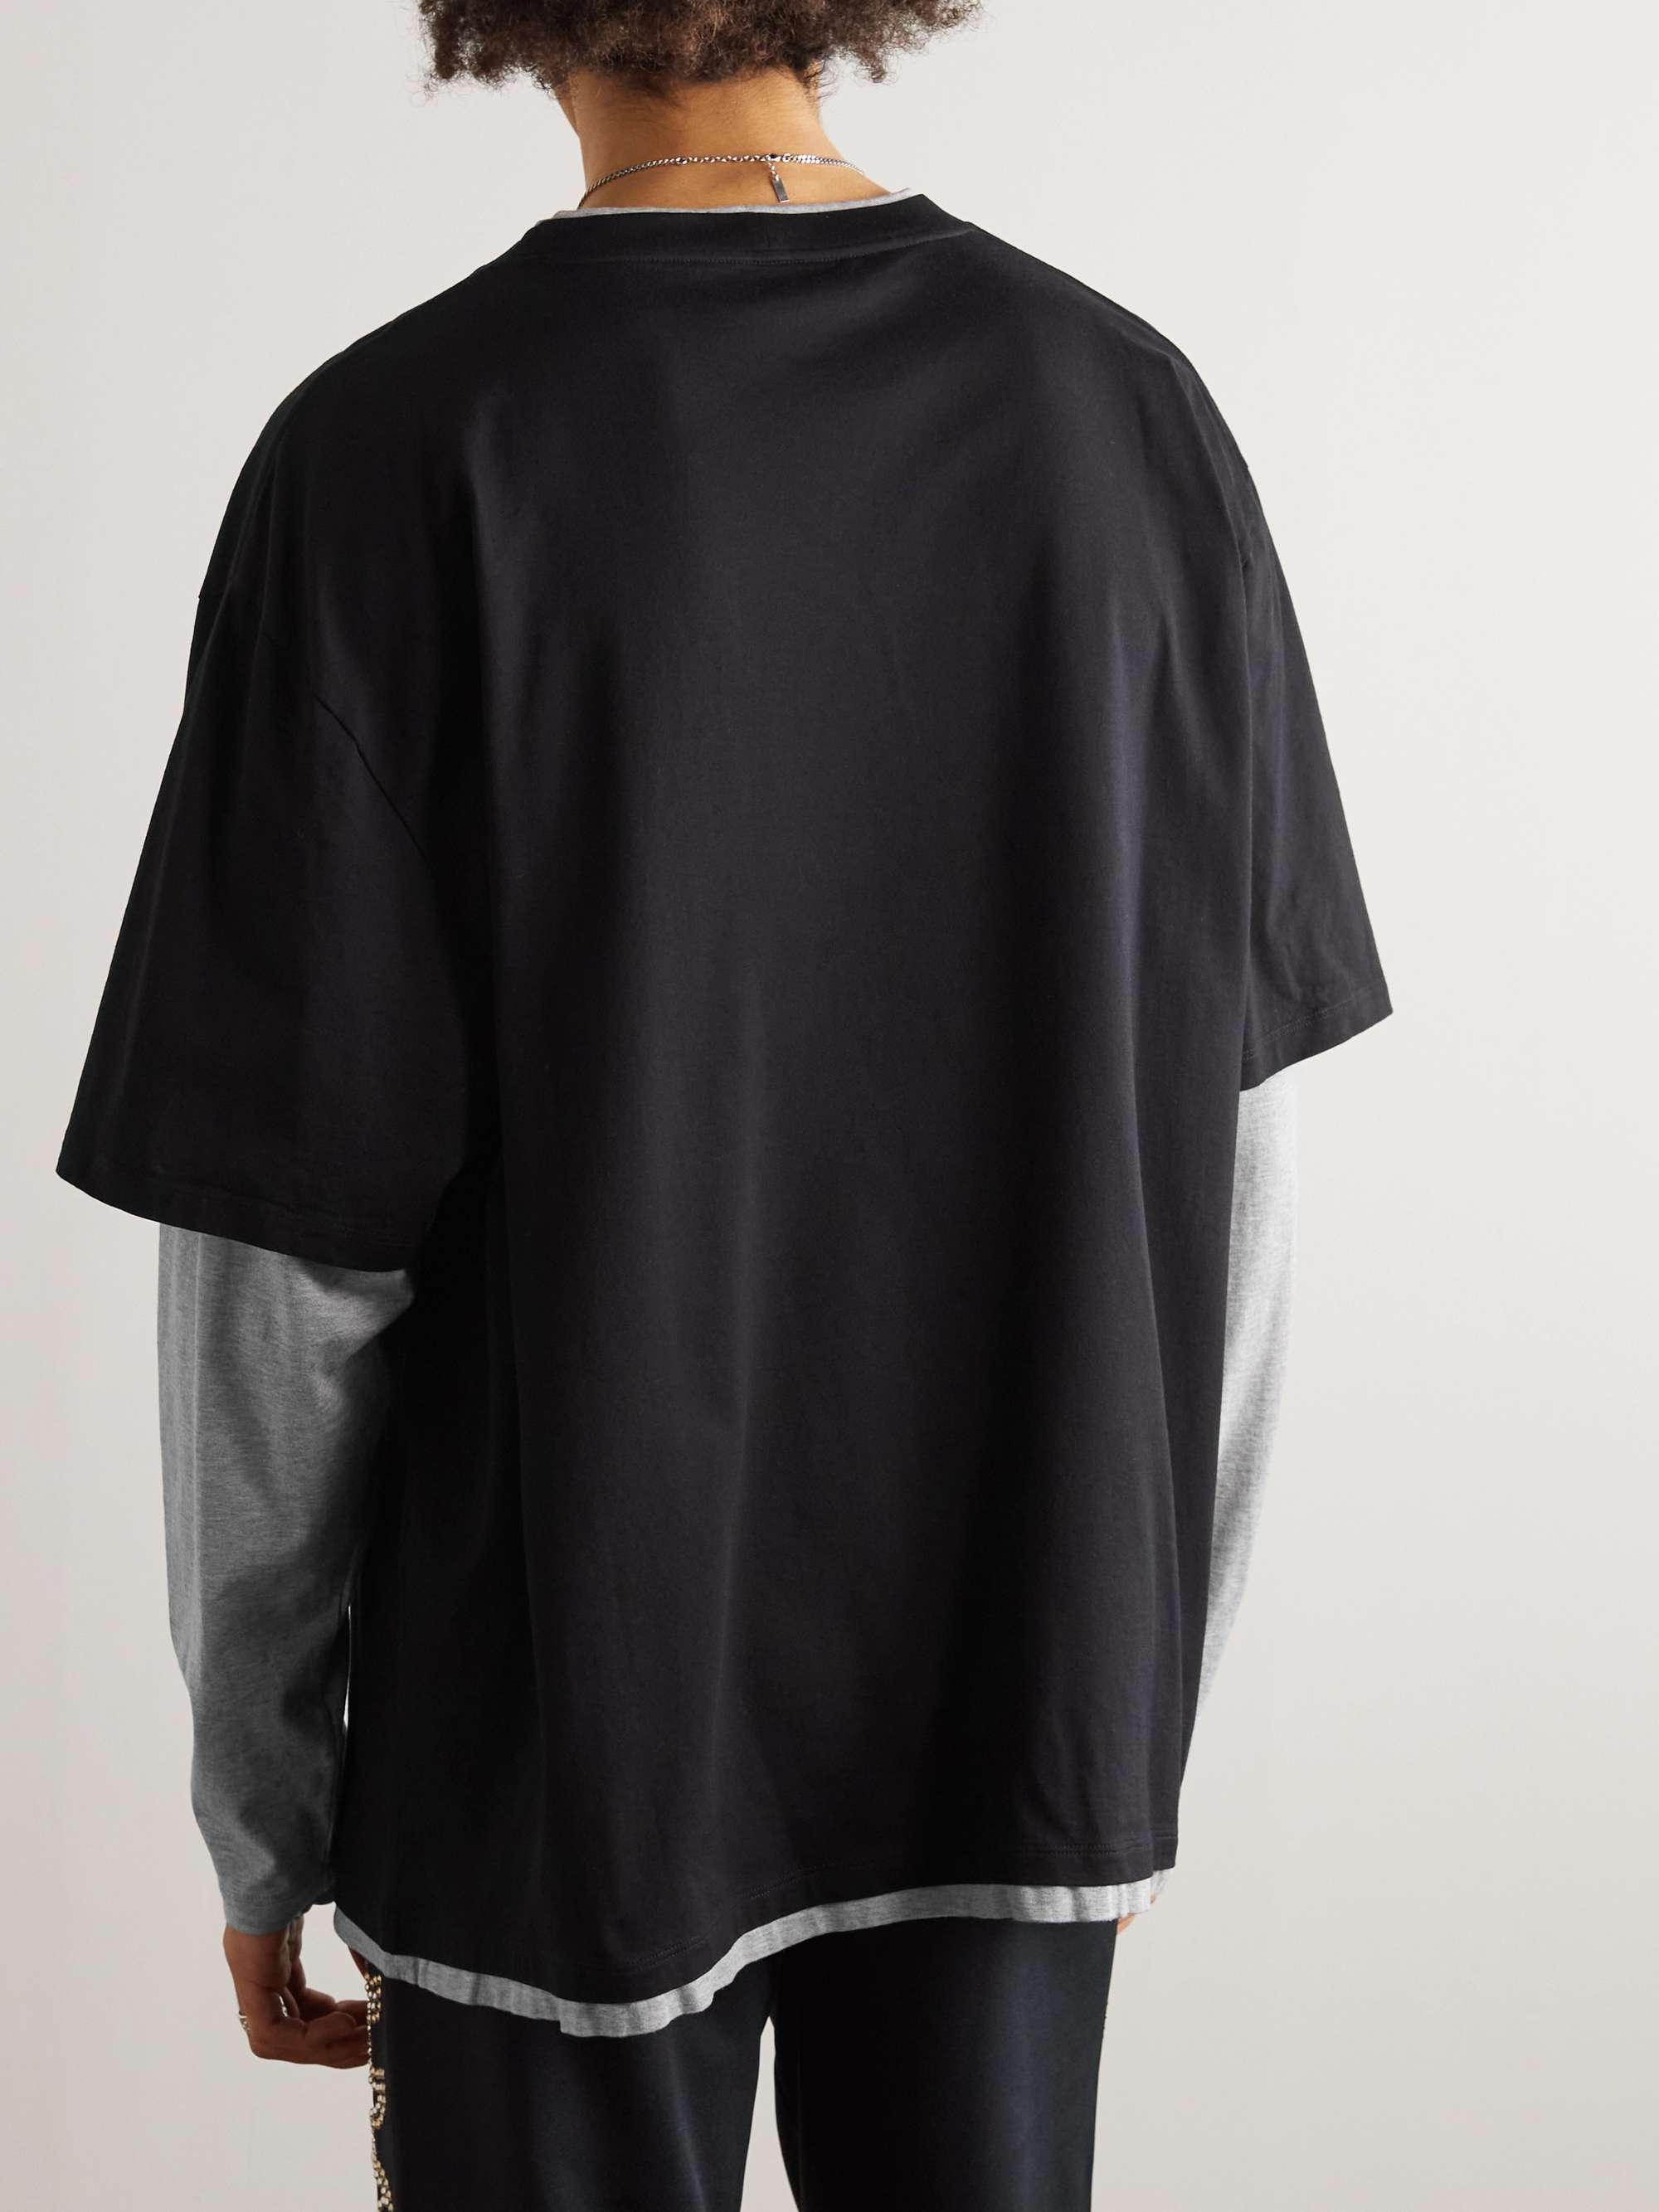 CELINE HOMME Layered Logo-Print Cotton-Jersey T-Shirt